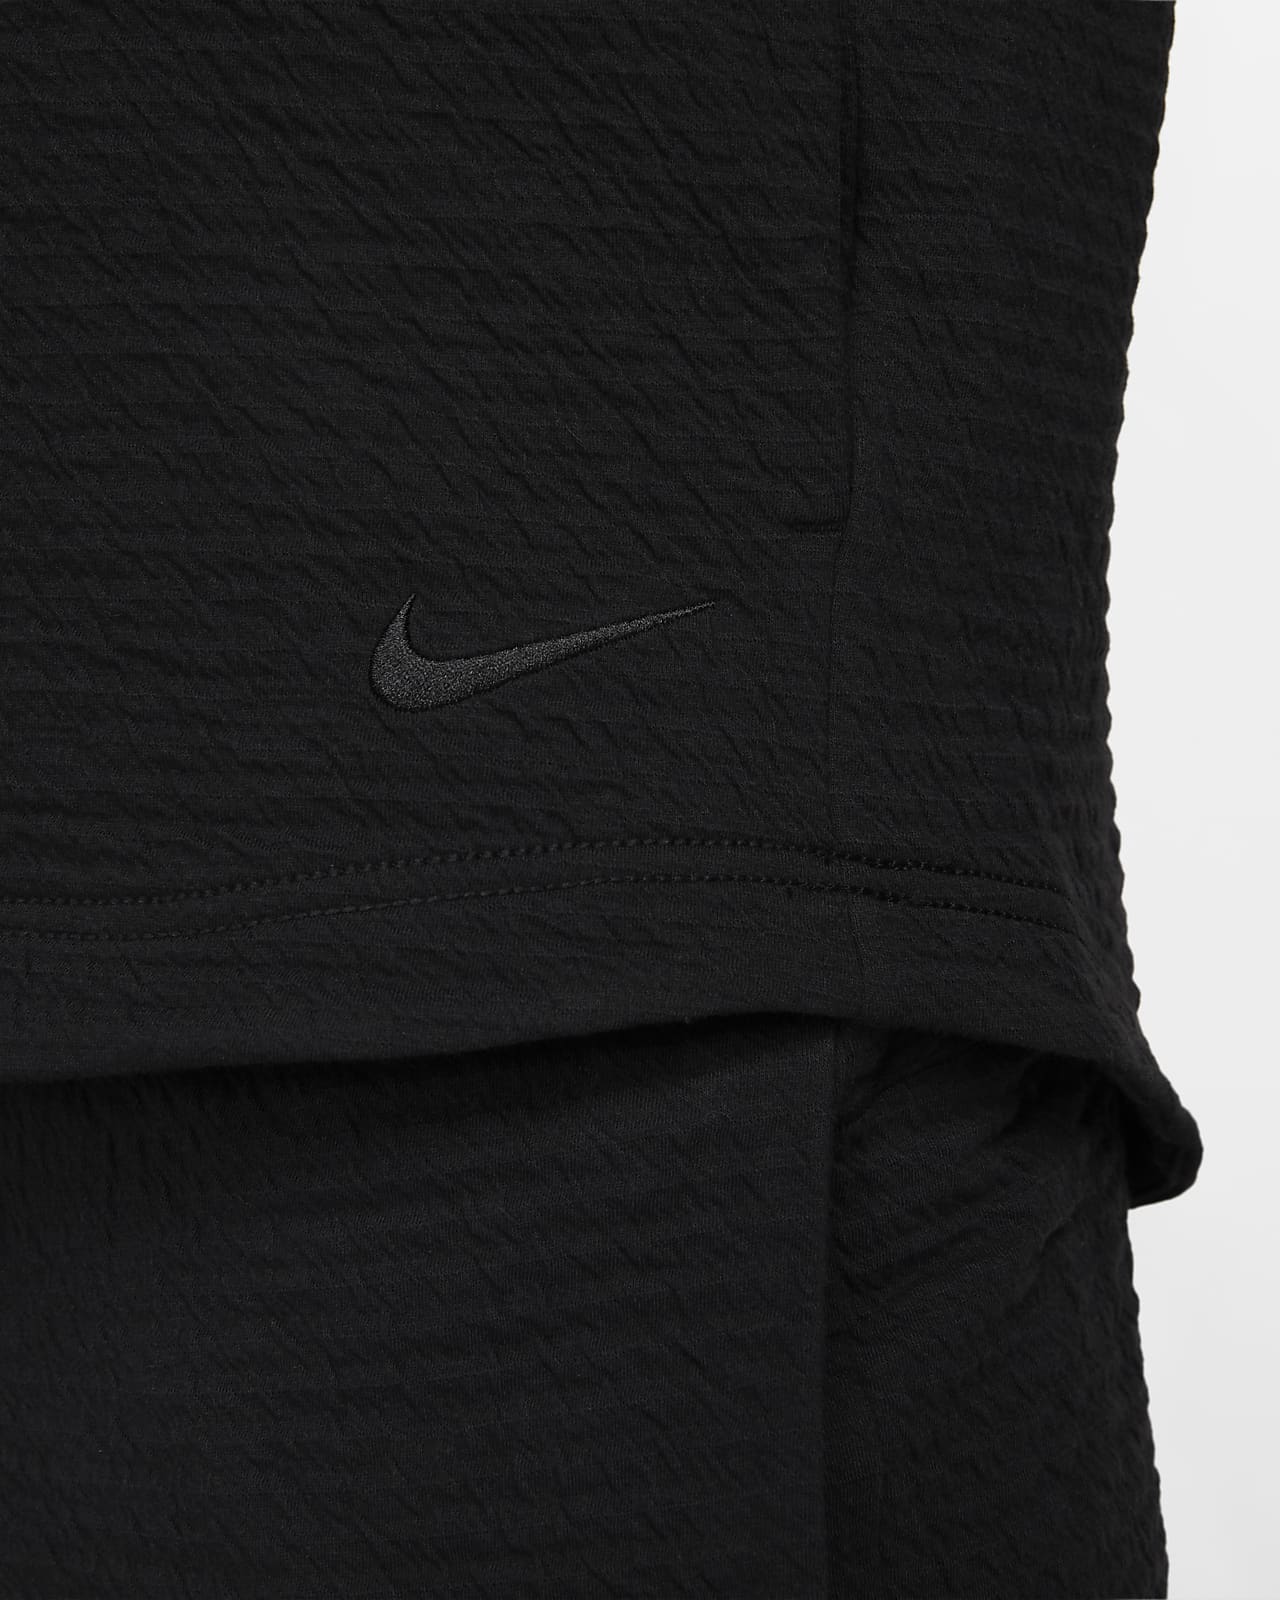 Nike Texture Men's Nike Long-Sleeve Yoga Top. Nike LU